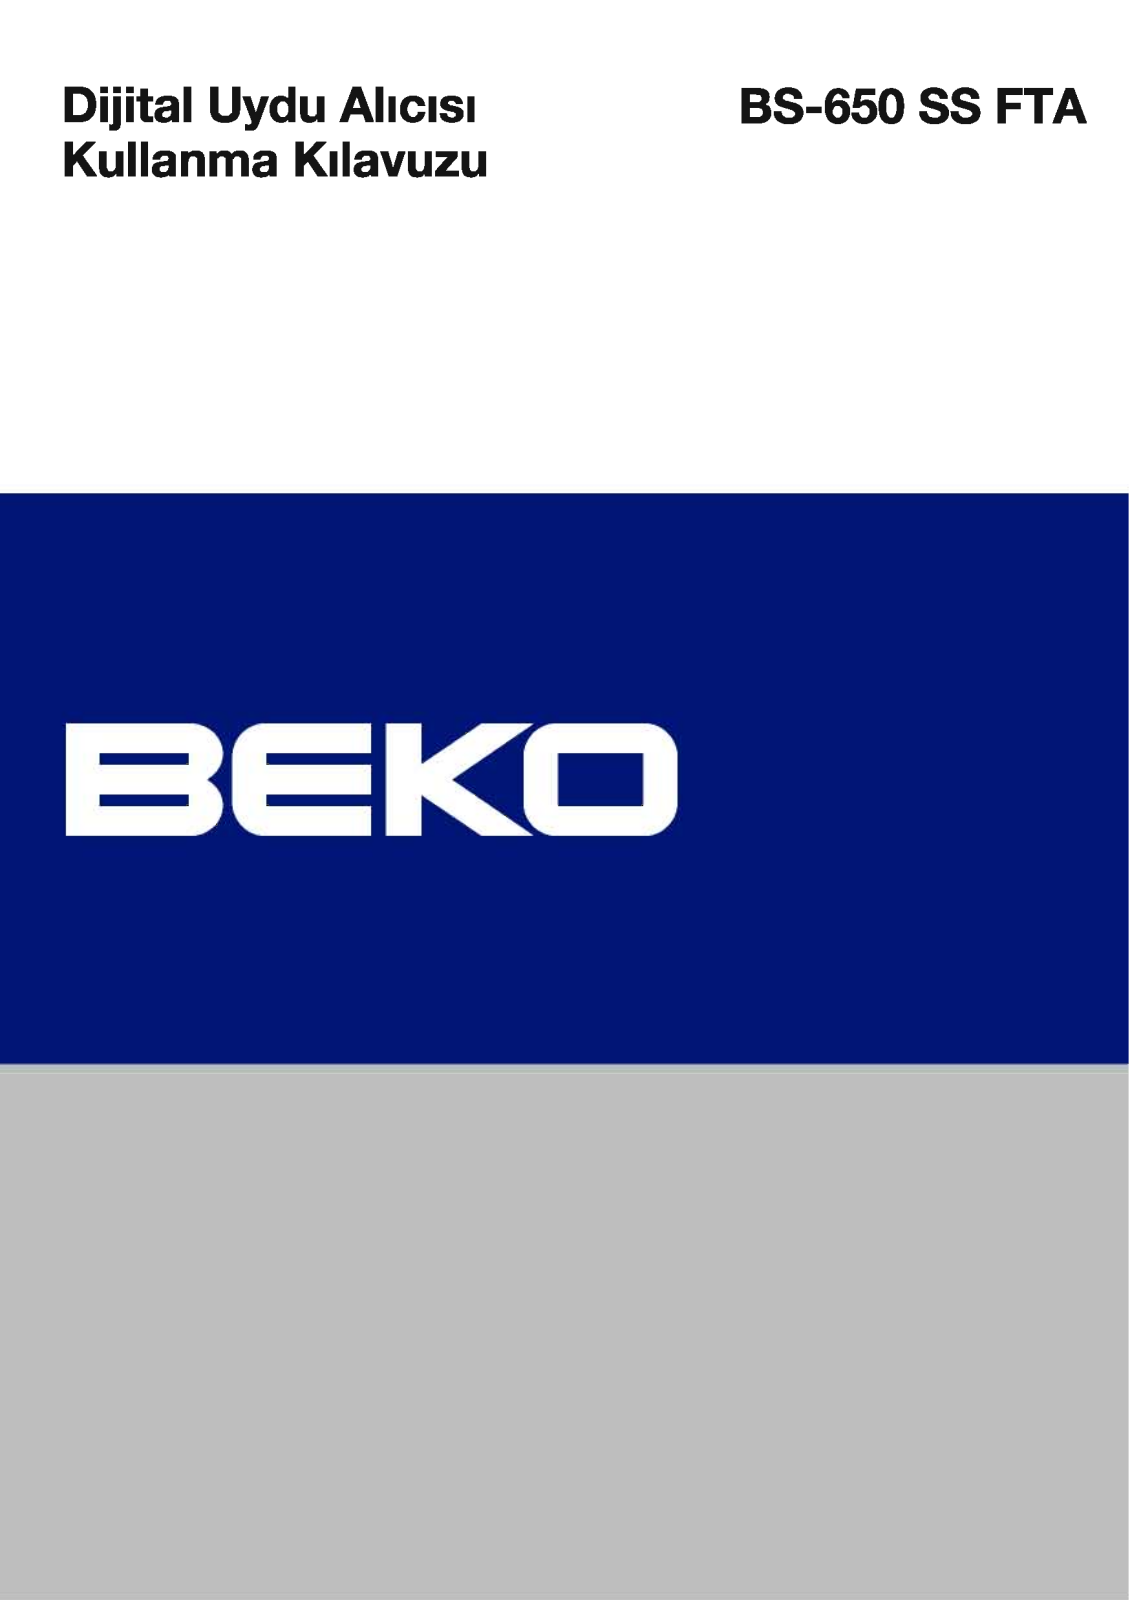 Beko BS-650 SS FTA Manual